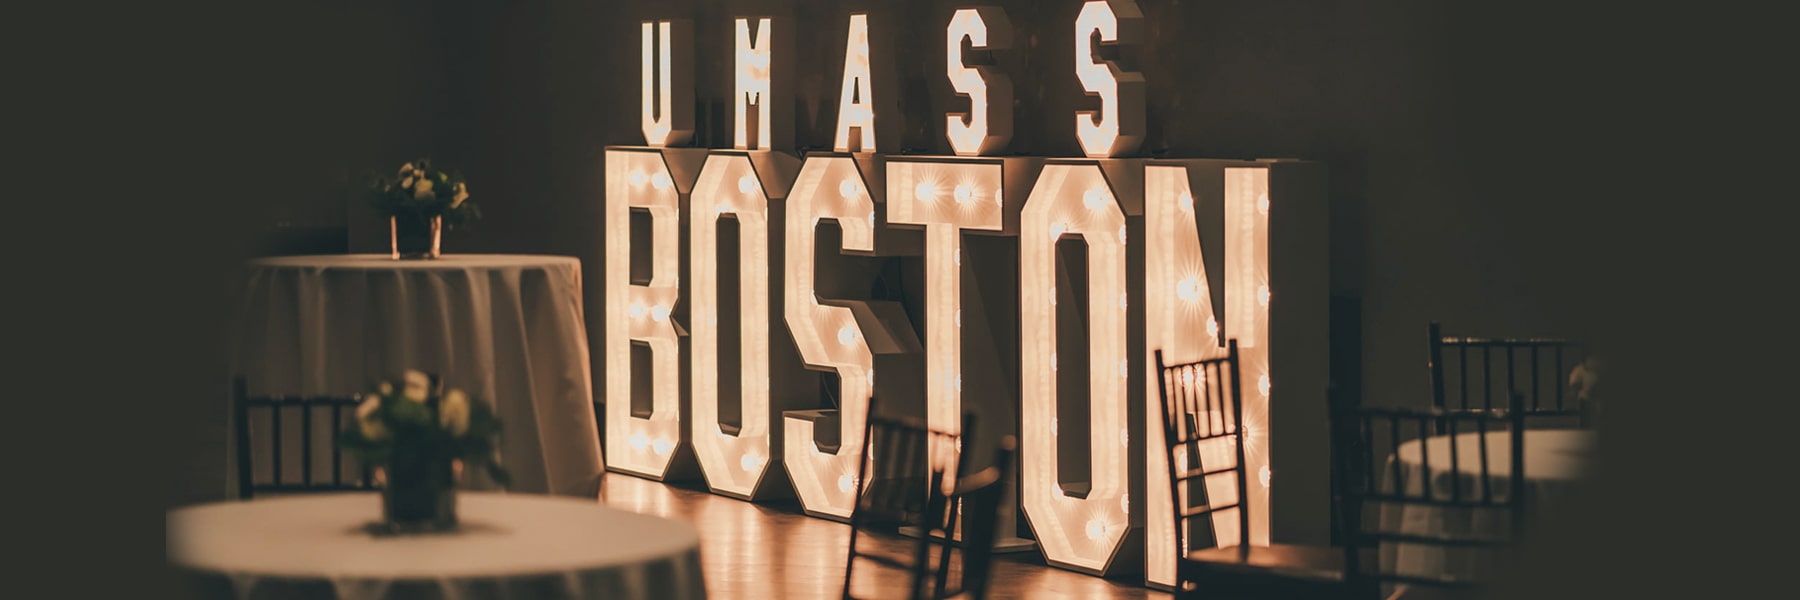 indoor sign of UMass Boston lit up